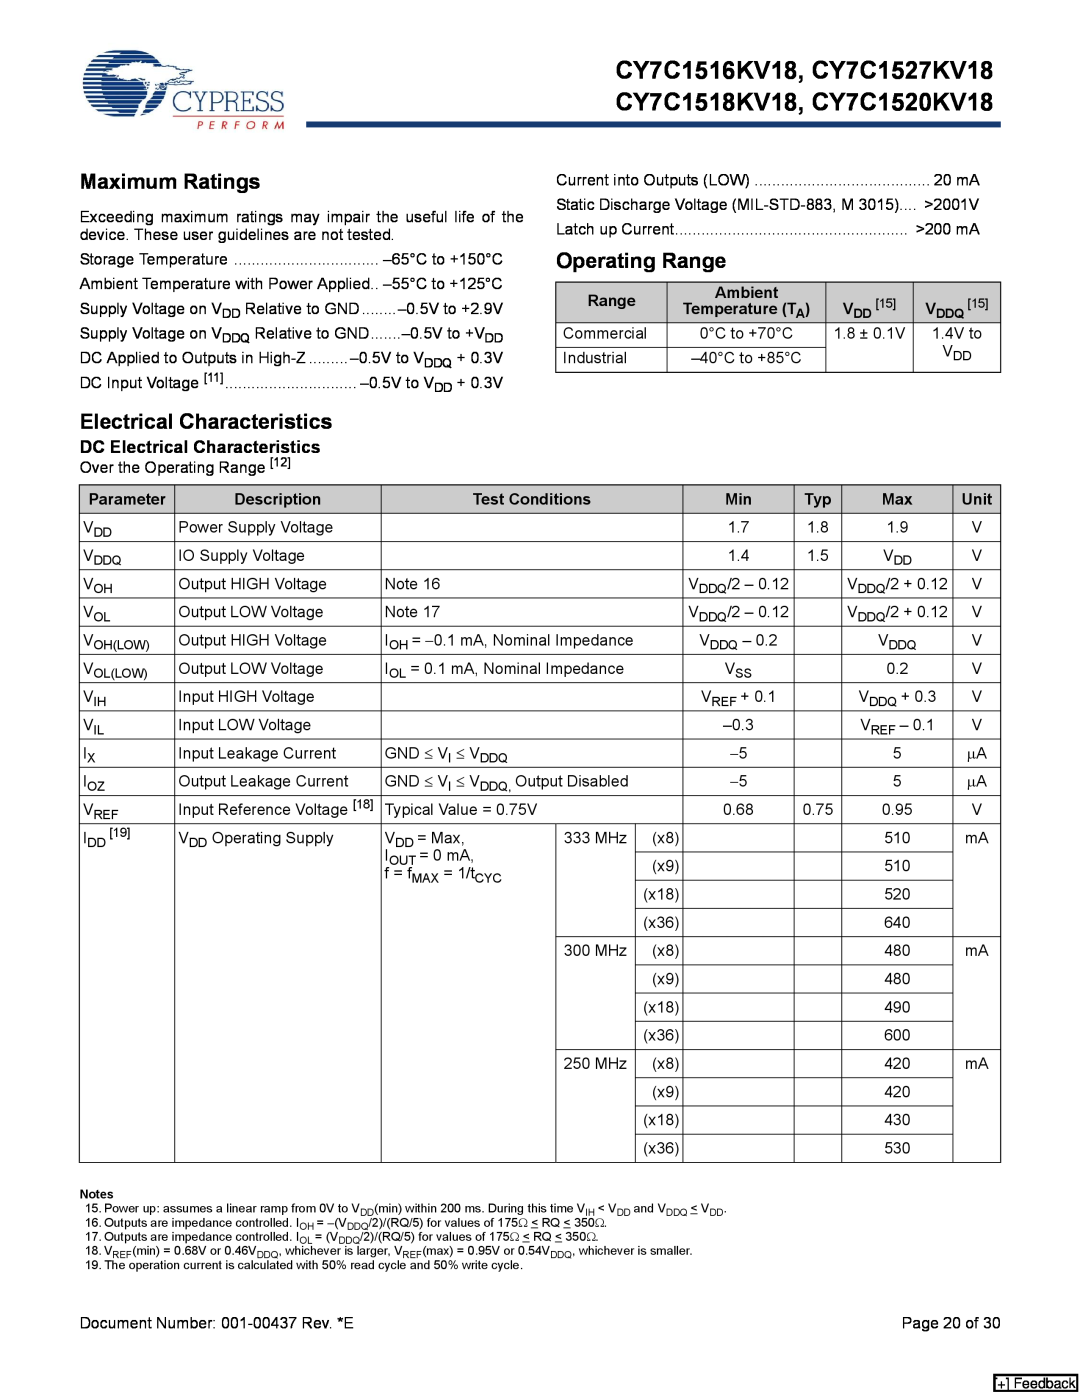 Cypress CY7C1520KV18, CY7C1516KV18, CY7C1527KV18 manual Maximum Ratings, Operating Range, DC Electrical Characteristics 